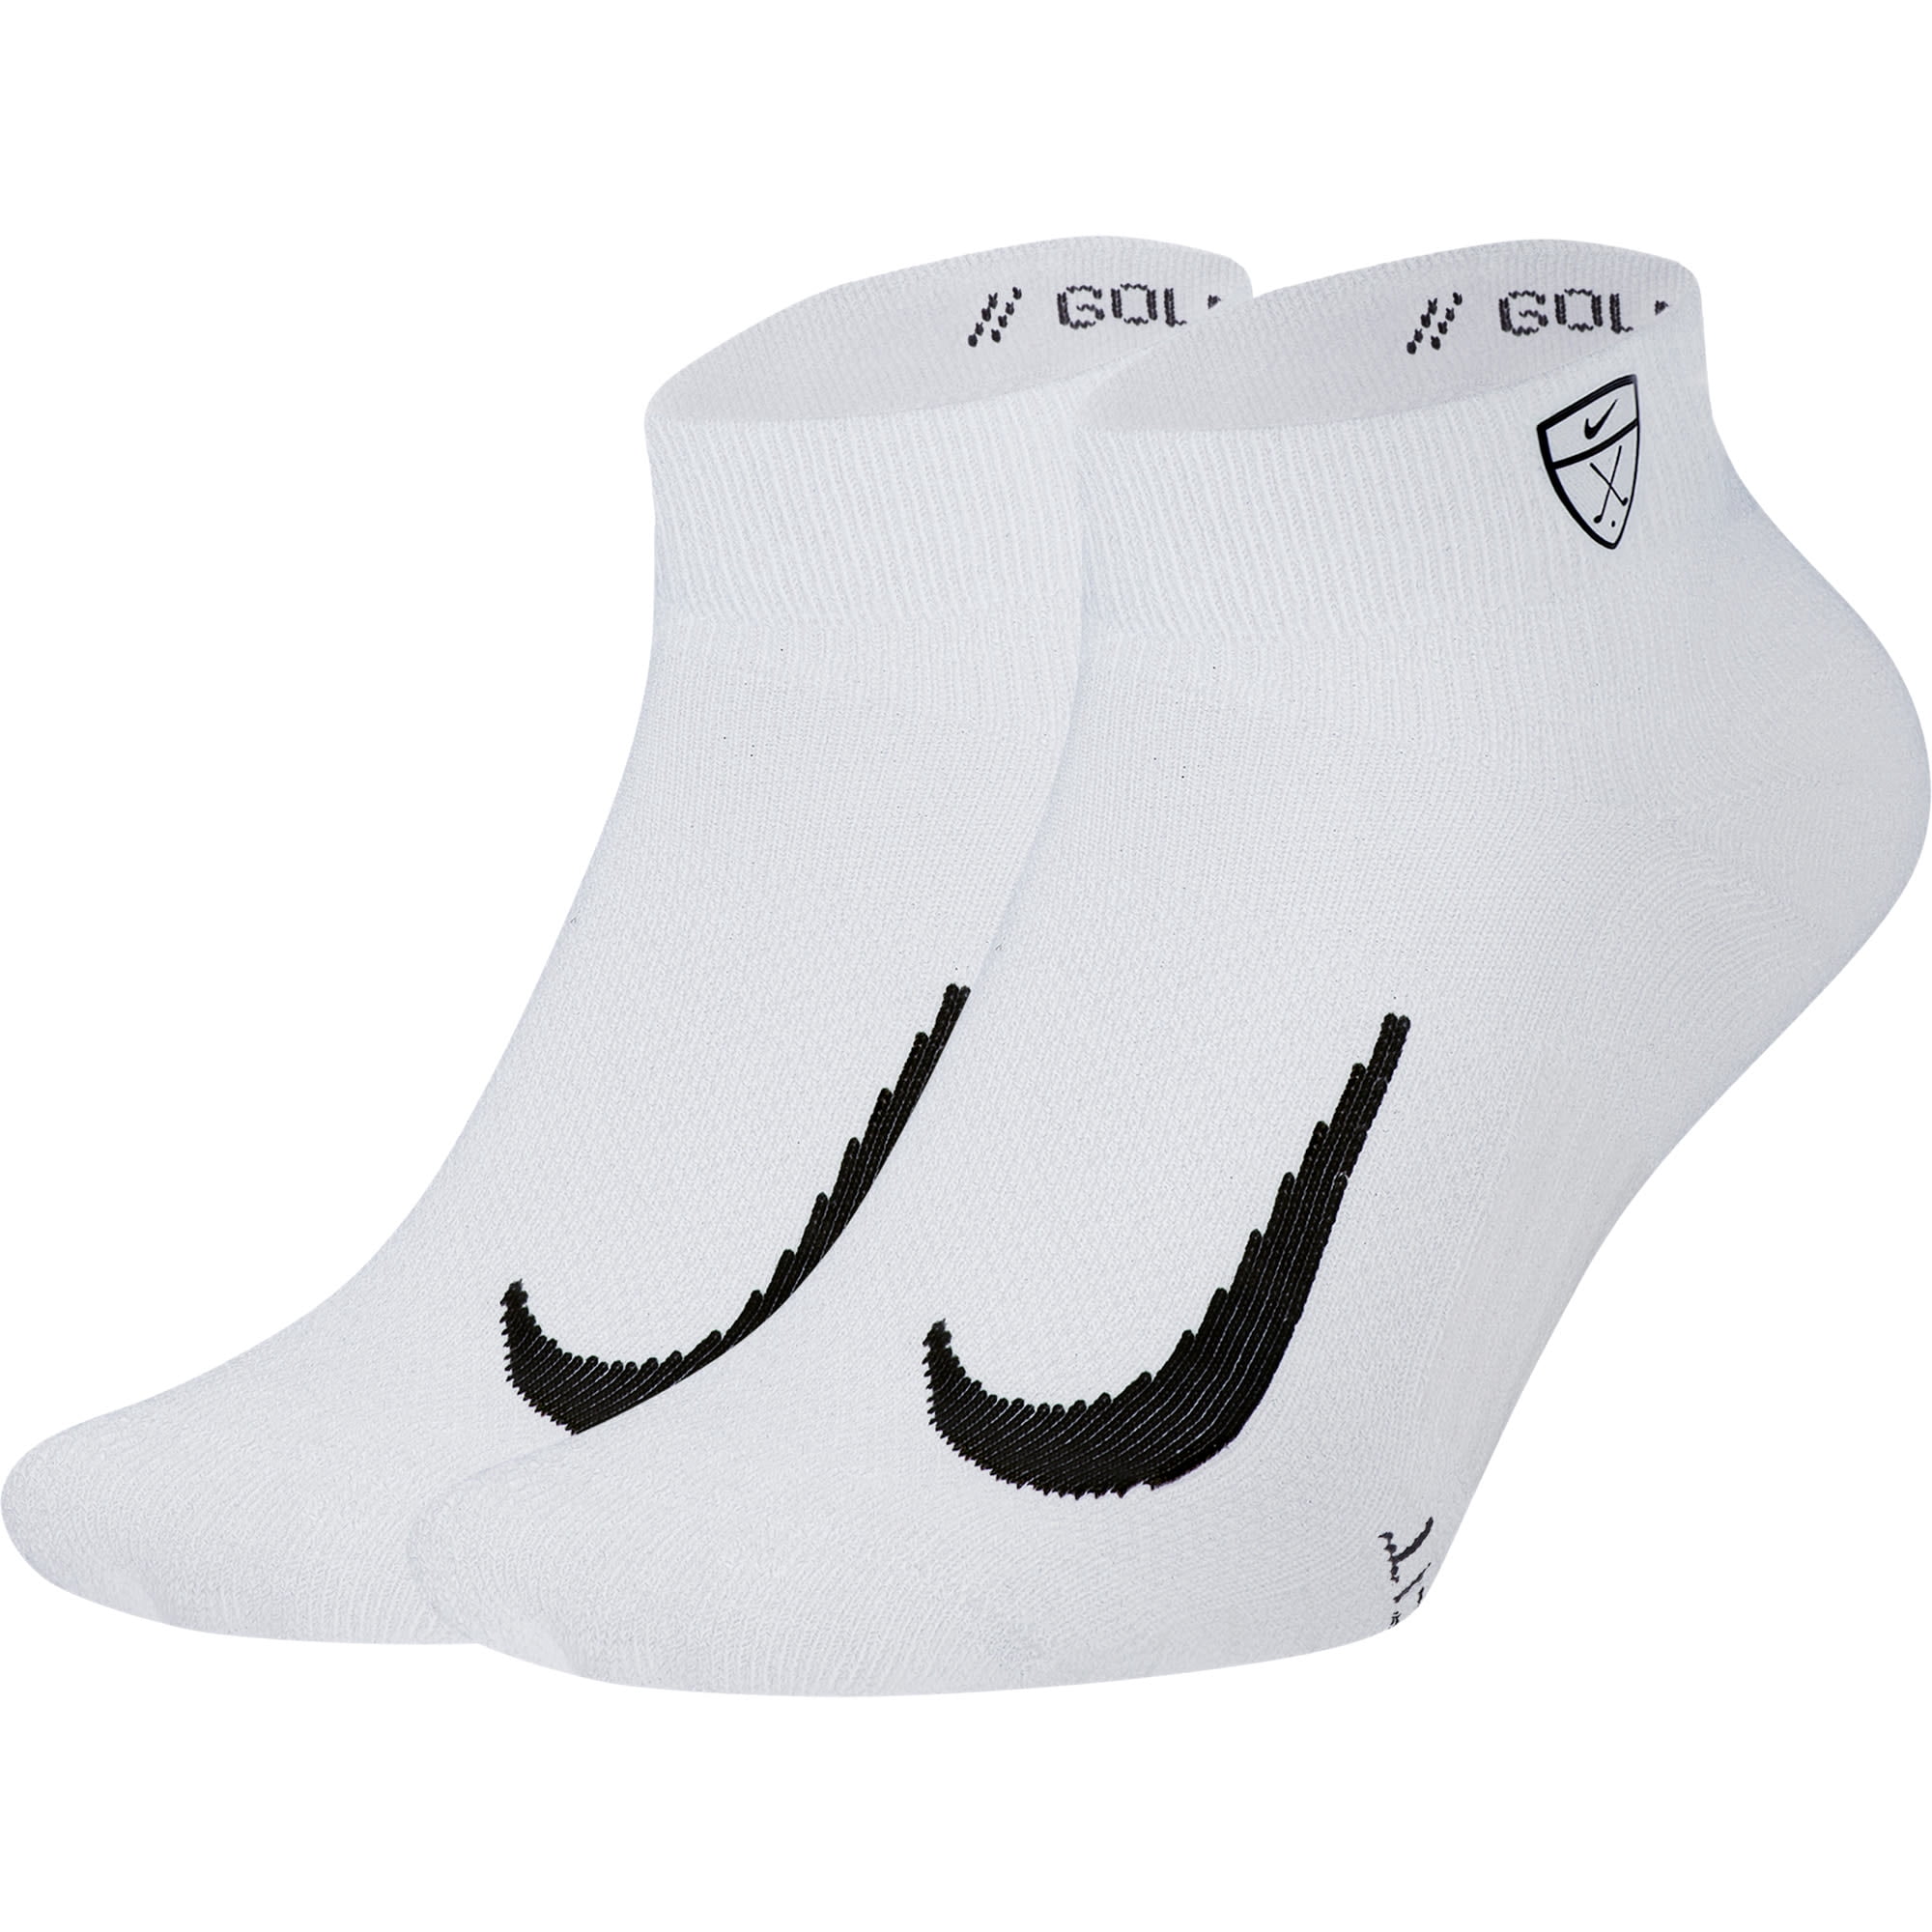 Nike Golf Multiplier Cushioned Golf Low Socks (2 Pairs) White CV2617 100 Sz M 6-8/ Wmns 6-10) - Walmart.com